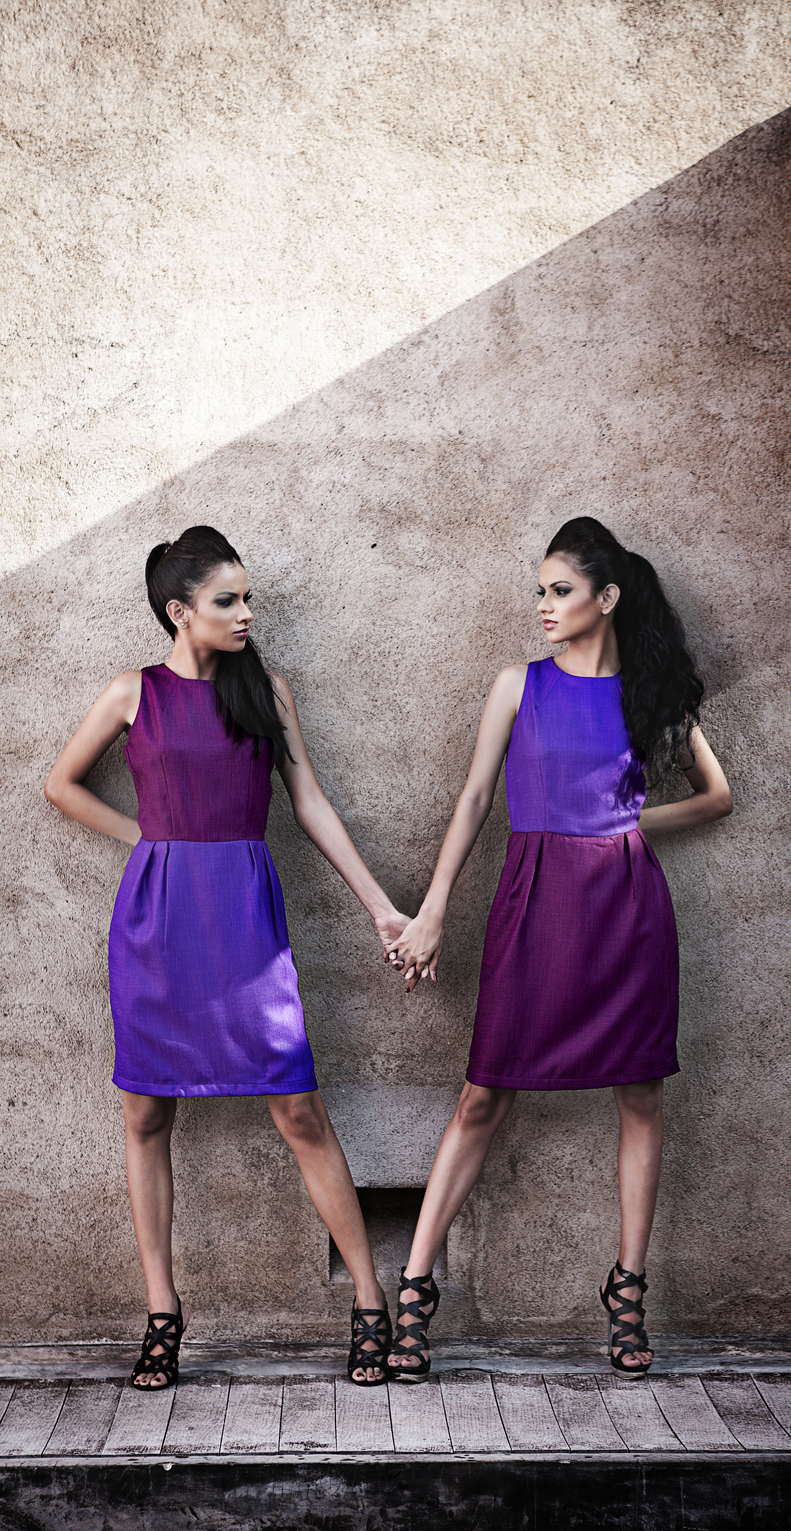 melanche fashion photography Twins twin sisters dimitri crusz Park street muse Sri lanka fashion ramona oshini